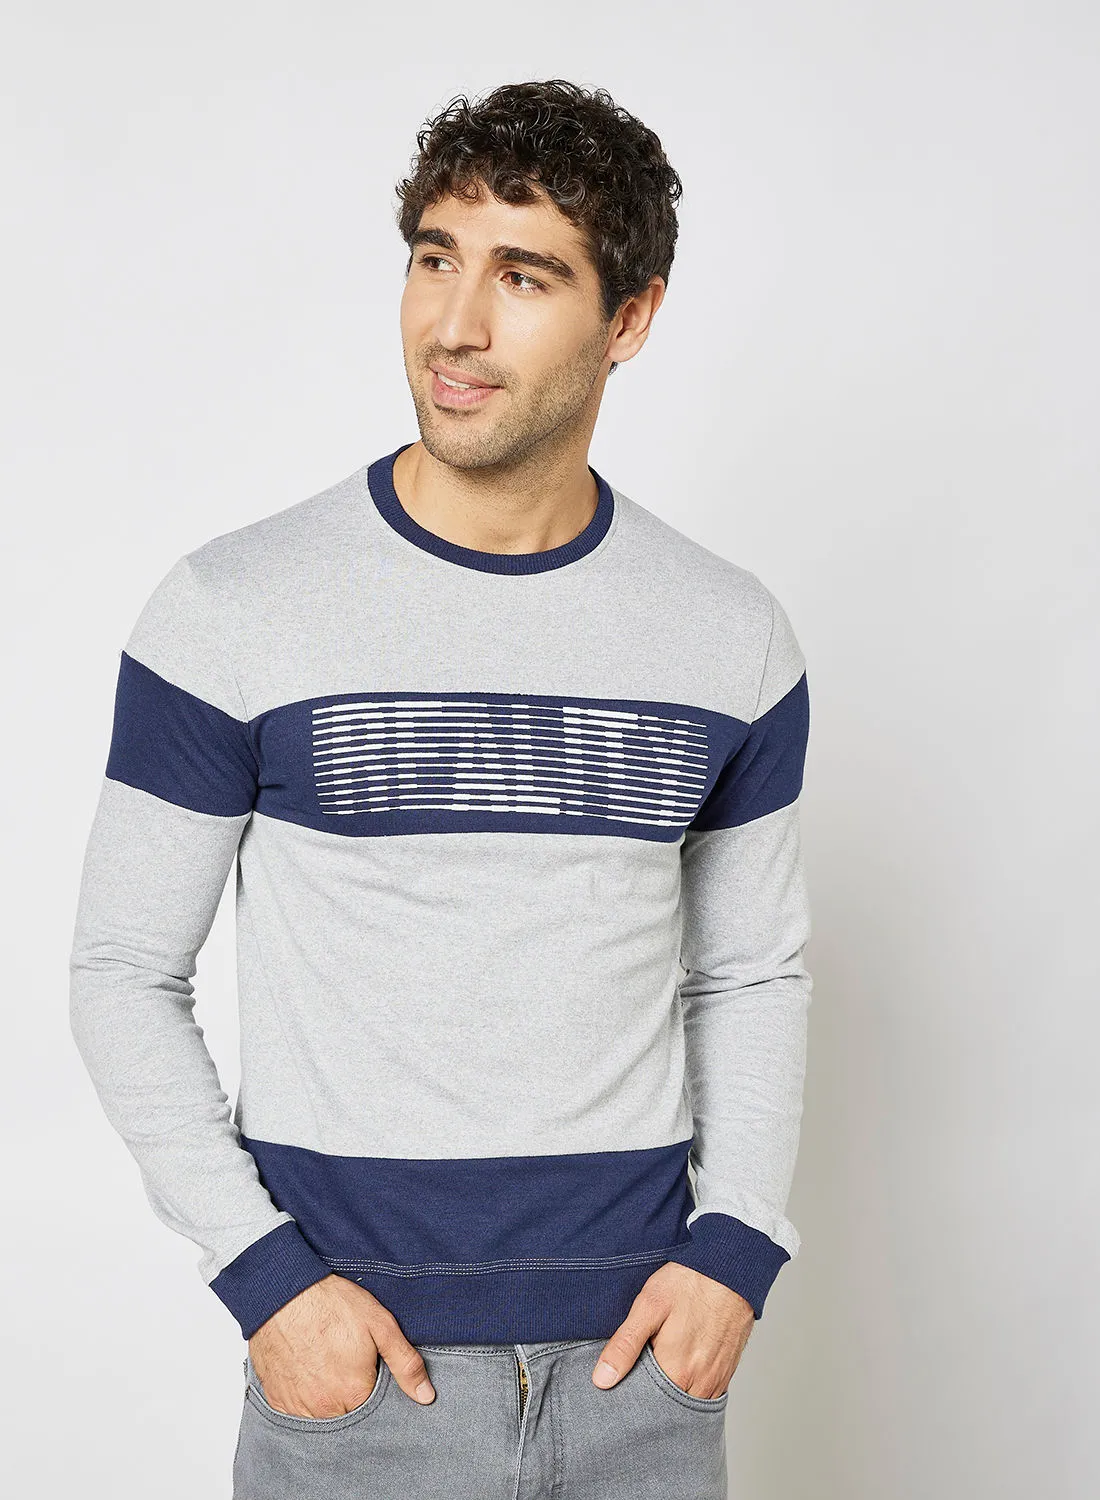 ABOF Regular Fit Sweatshirt رمادي وأزرق